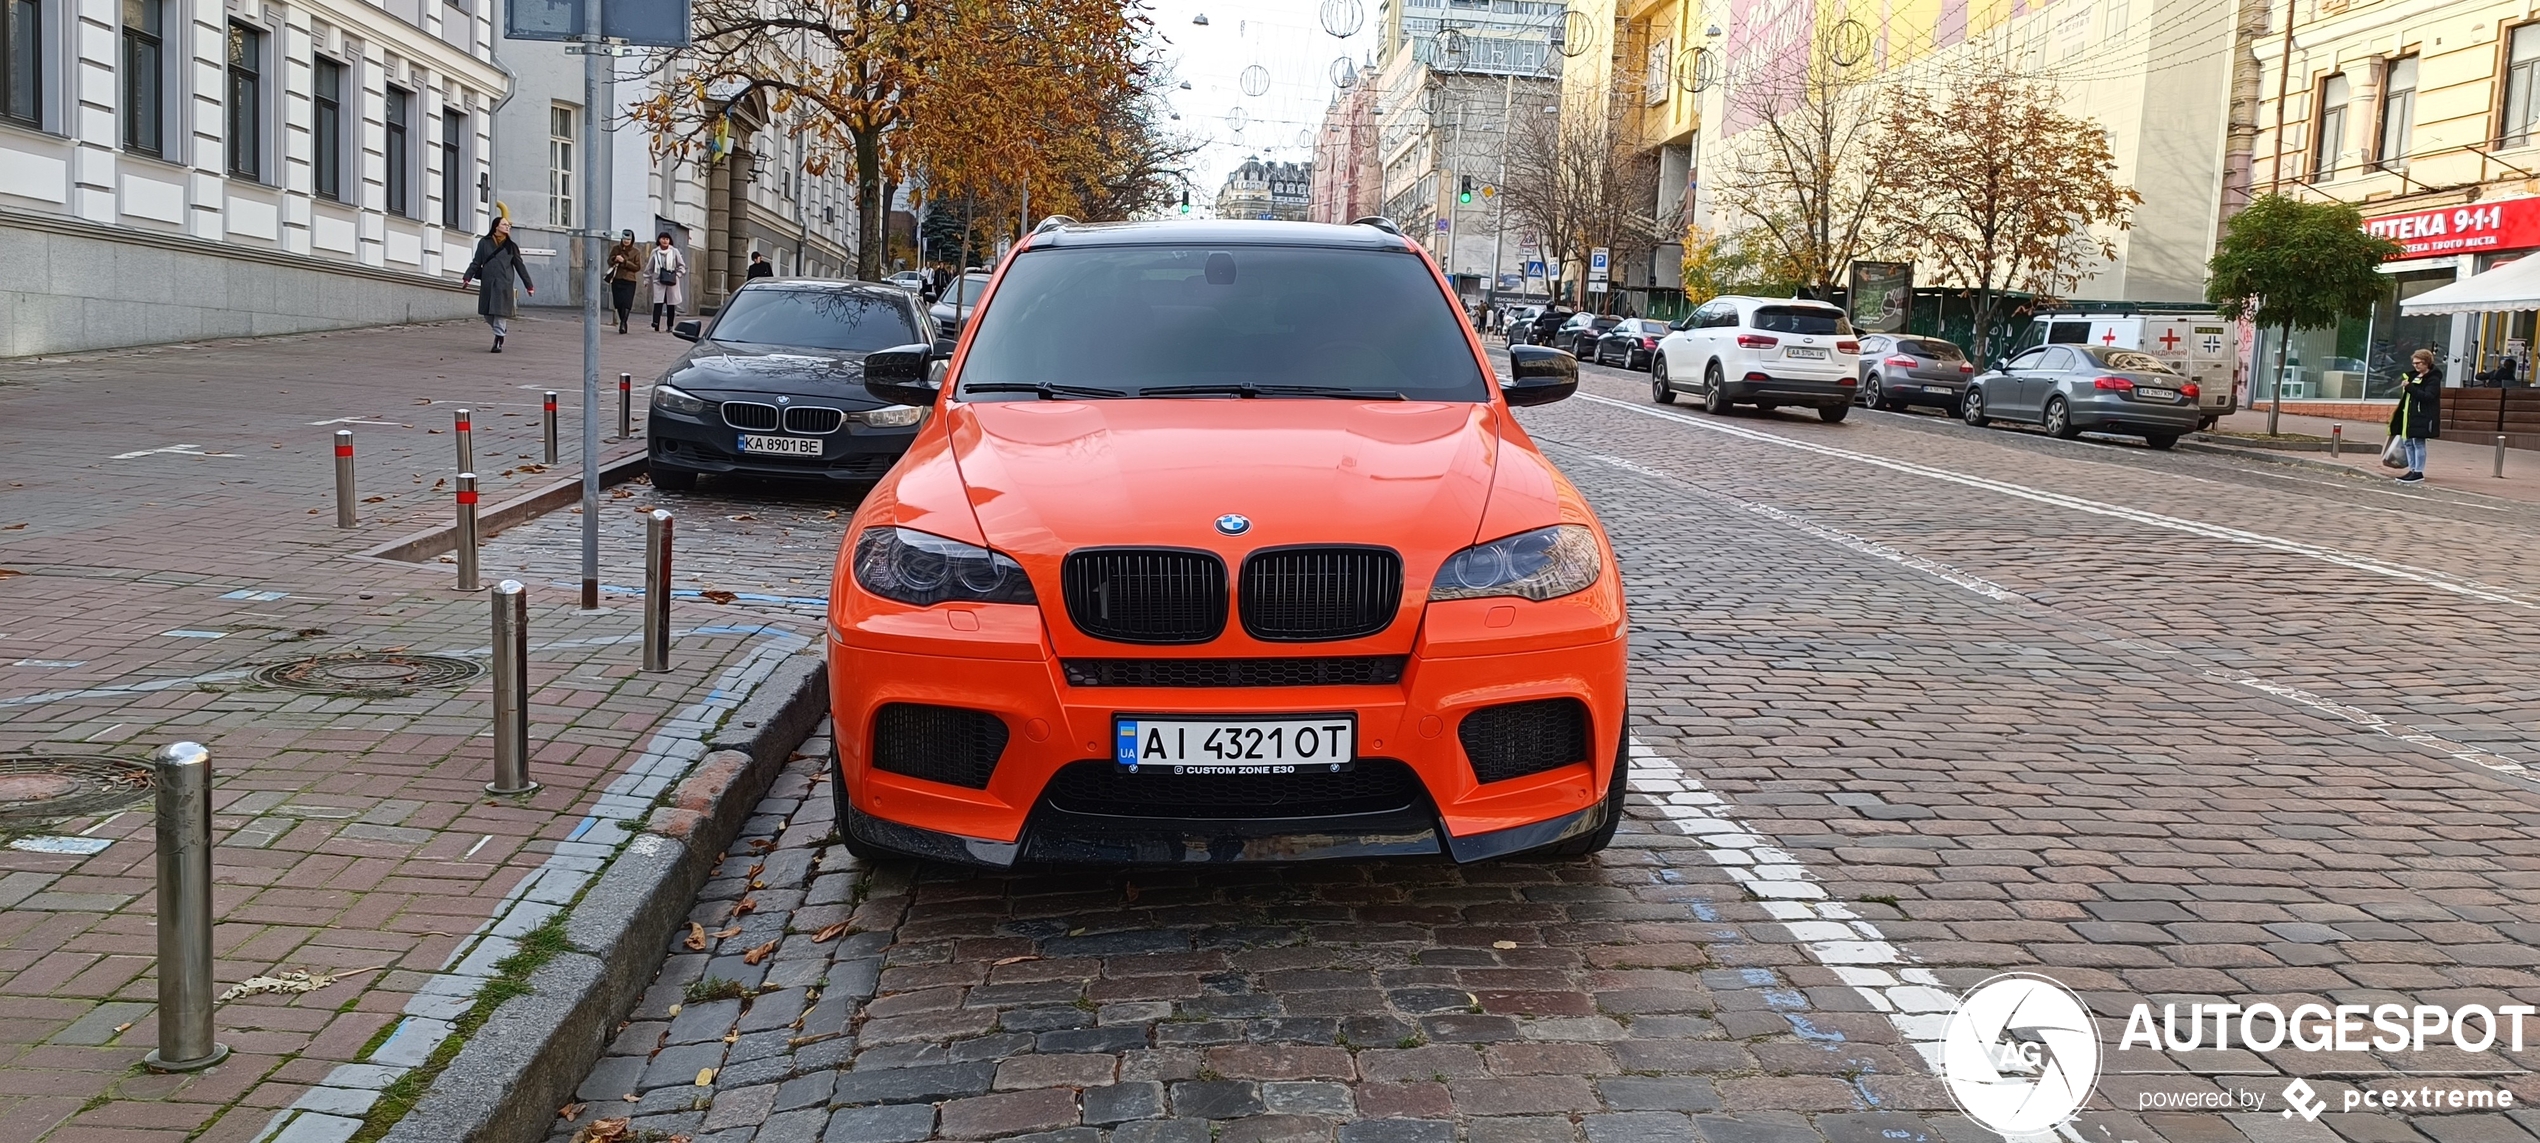 BMW X5 M E70 - 2 February 2021 - Autogespot